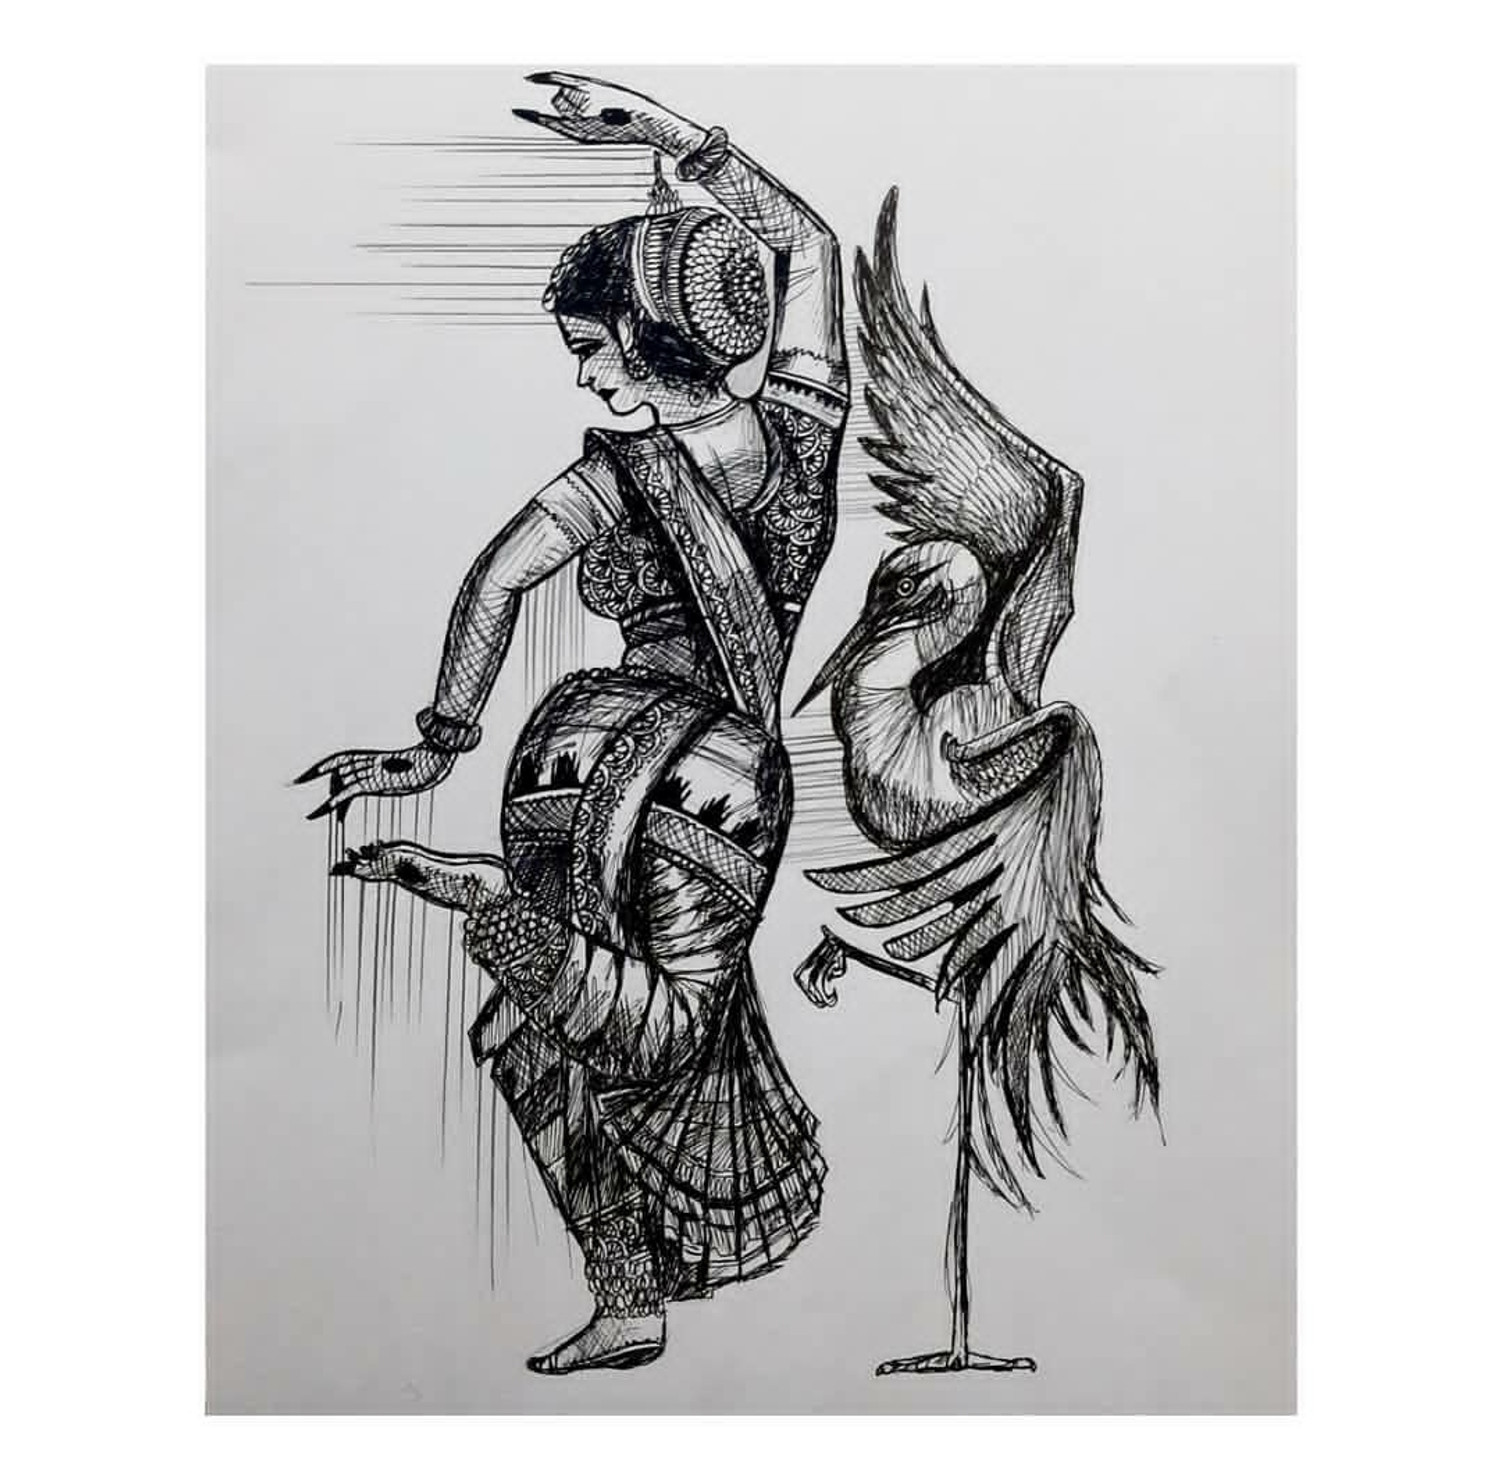 Doodle / Zentangle Art of Bharatanatyam classical dancer | Full video :  https://youtu.be/MgtJRESxVAM | By DLux's ArtworkFacebook